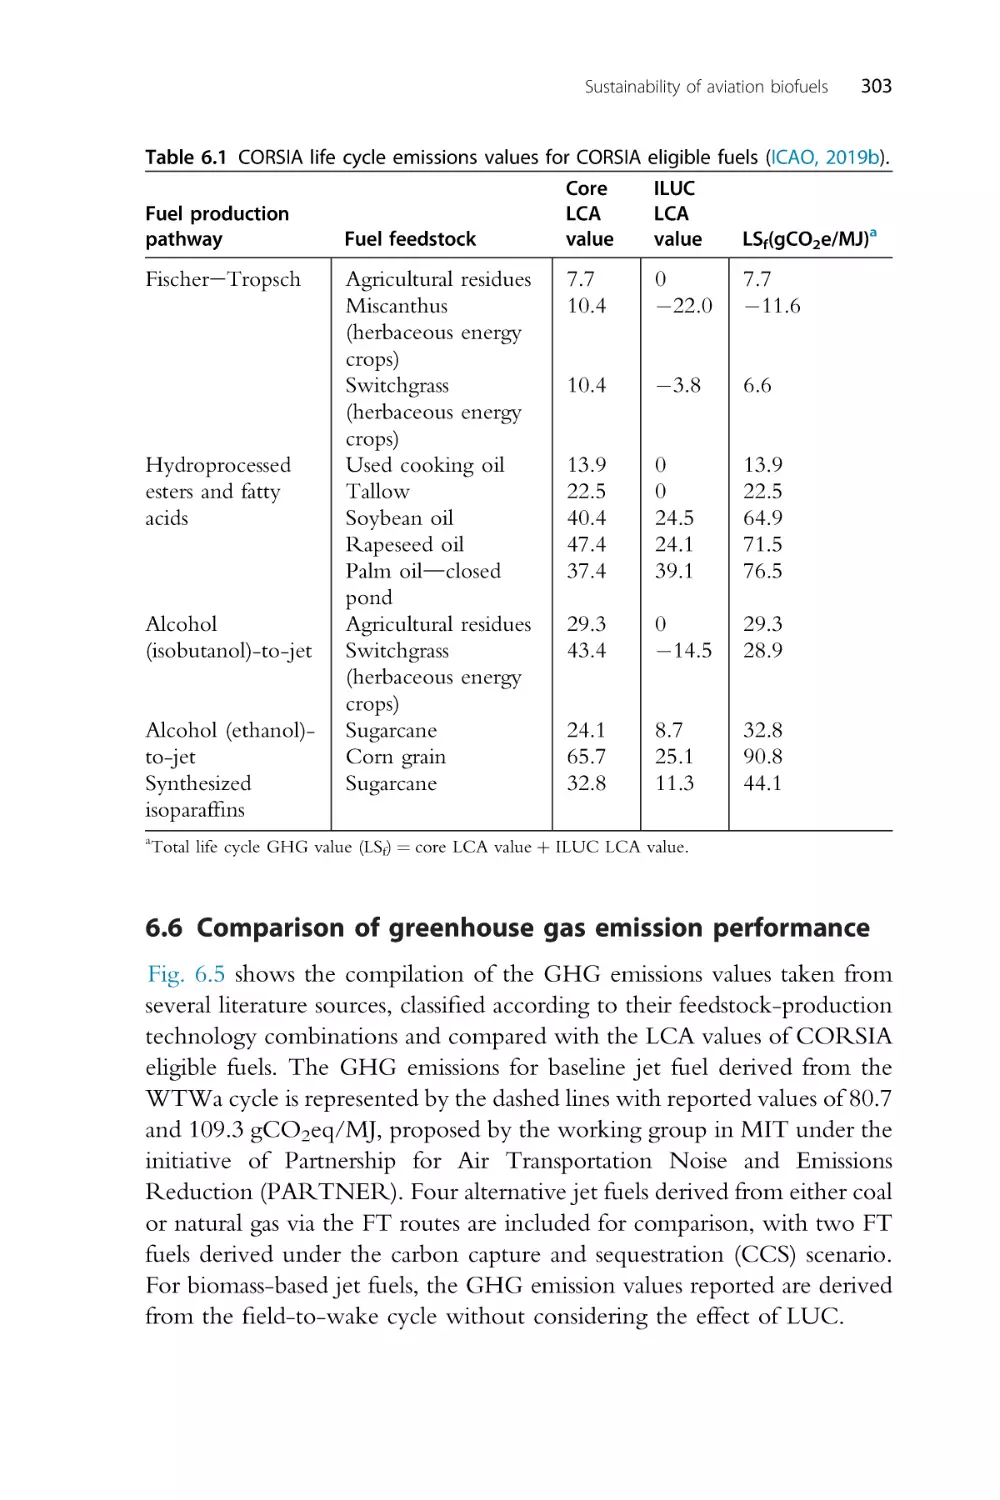 6.6 Comparison of greenhouse gas emission performance